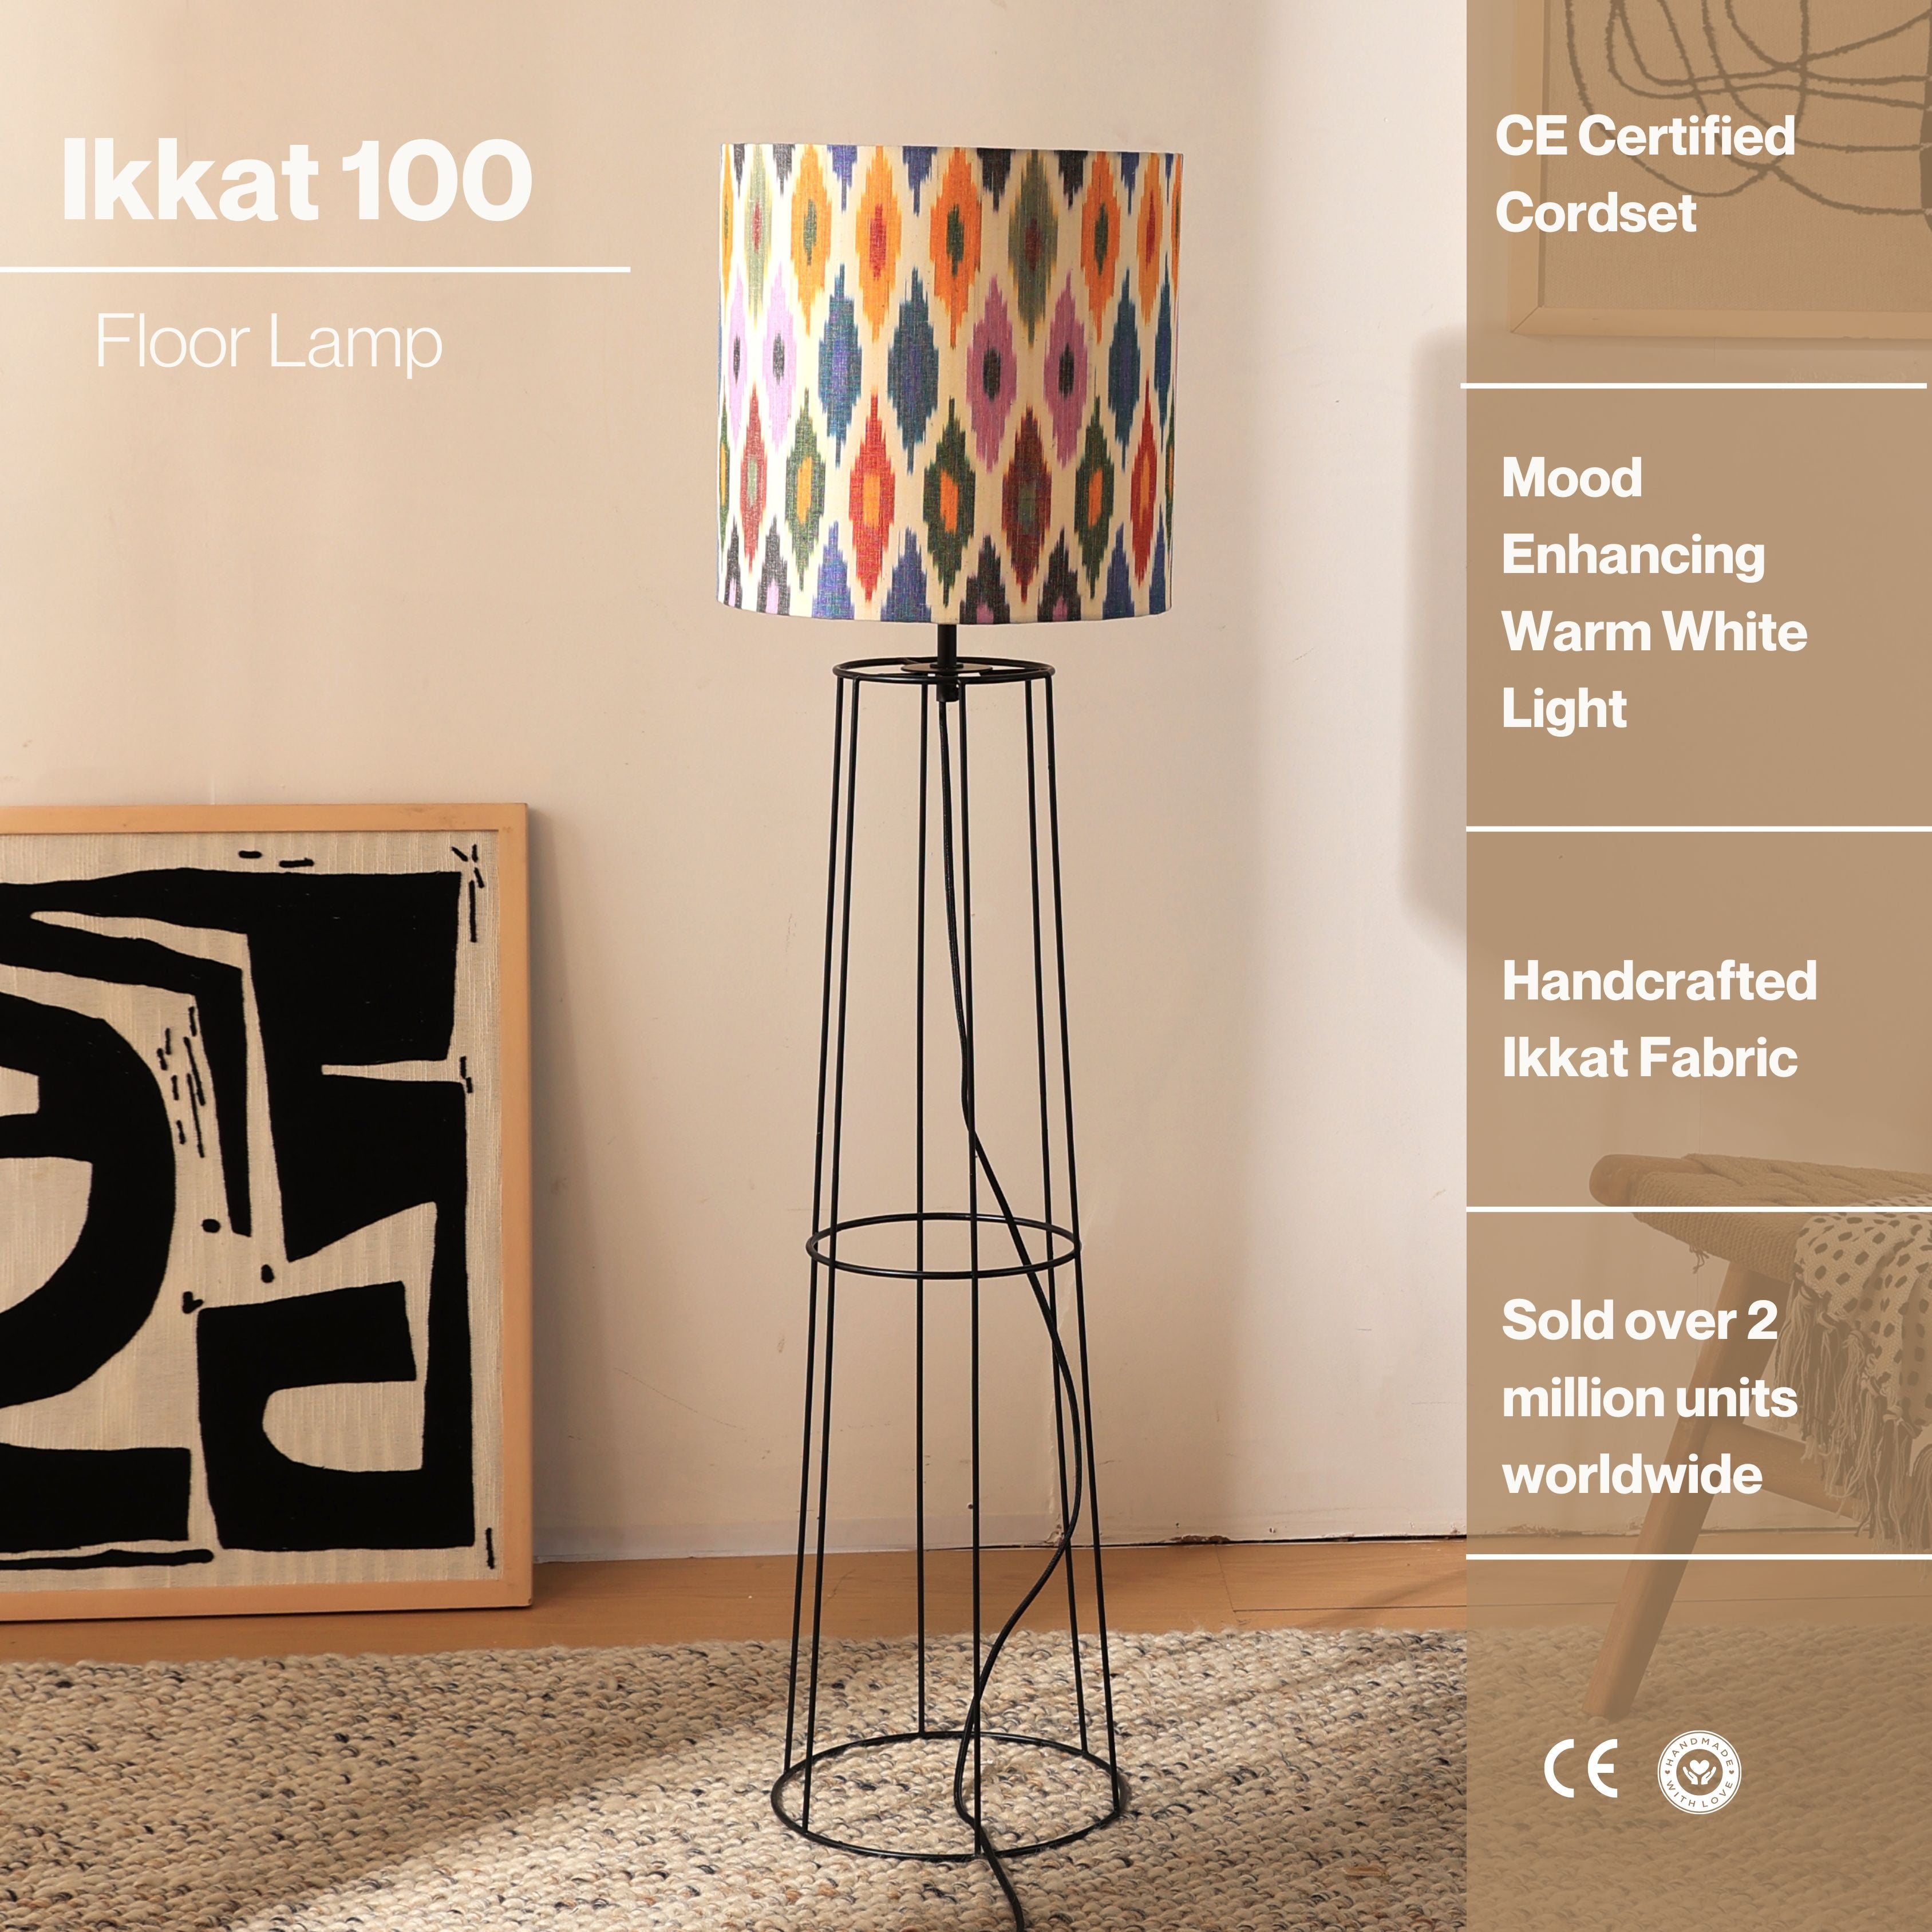 IKKAT 100 Floor Lamp - Ikkat Fabric, Floor Light, Indian Tripod Lamp and Scandinavia fusion, modern lighting, trending Standing Lamp